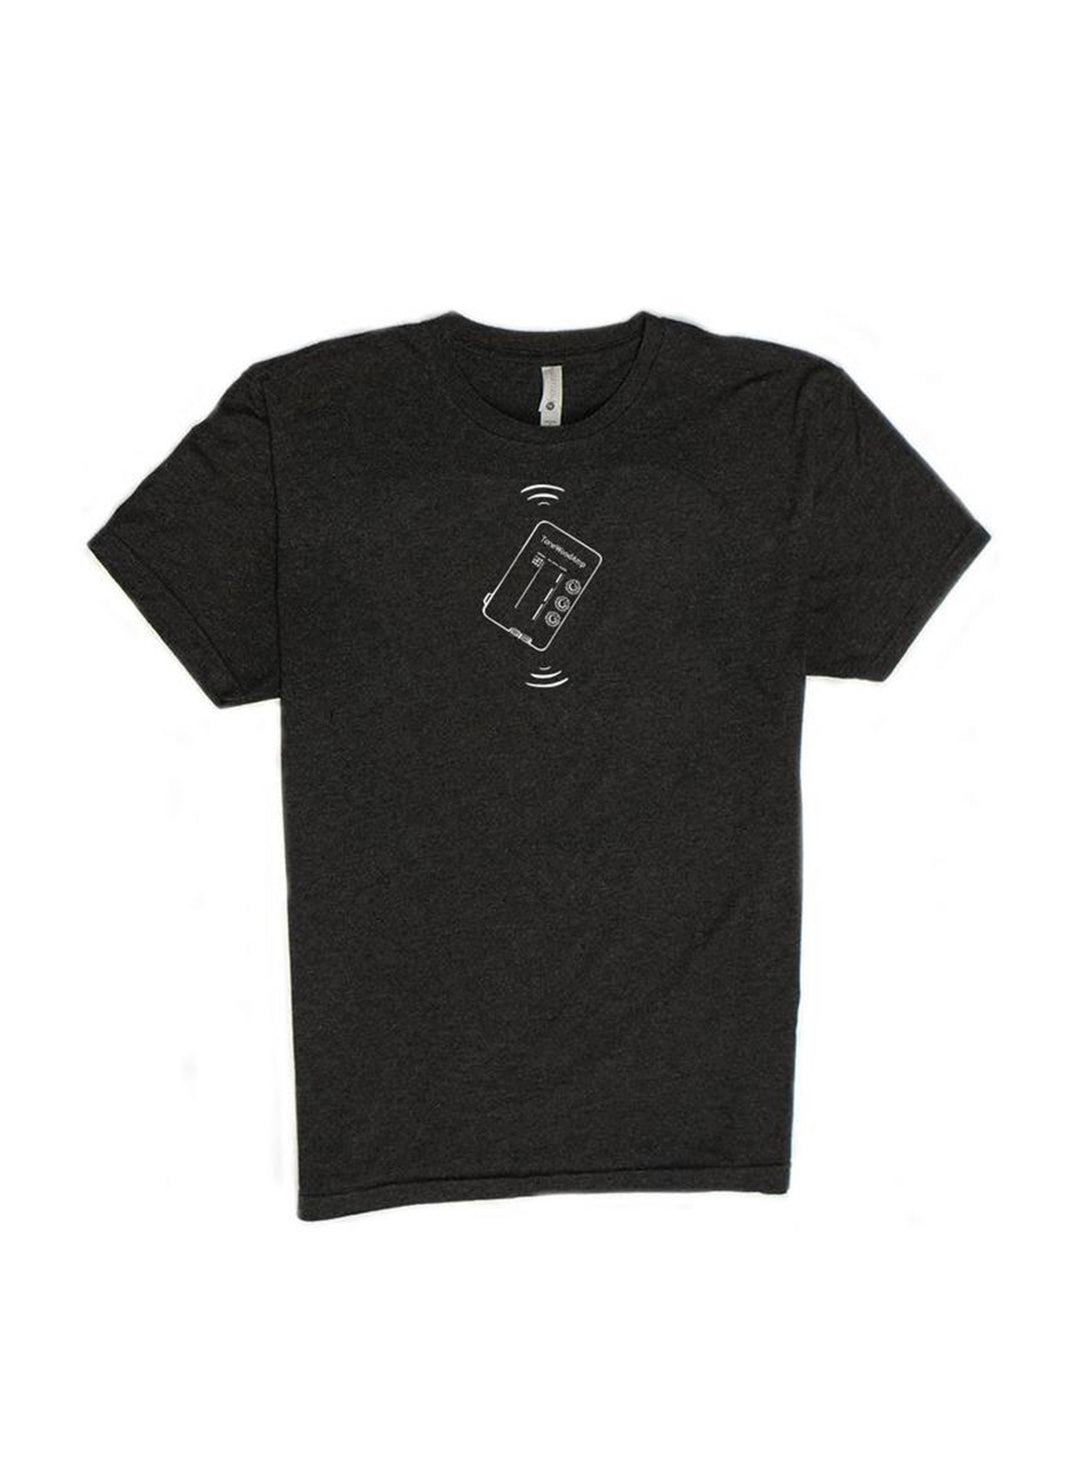 ToneWoodAmp "Side Effects" Men's T-shirt